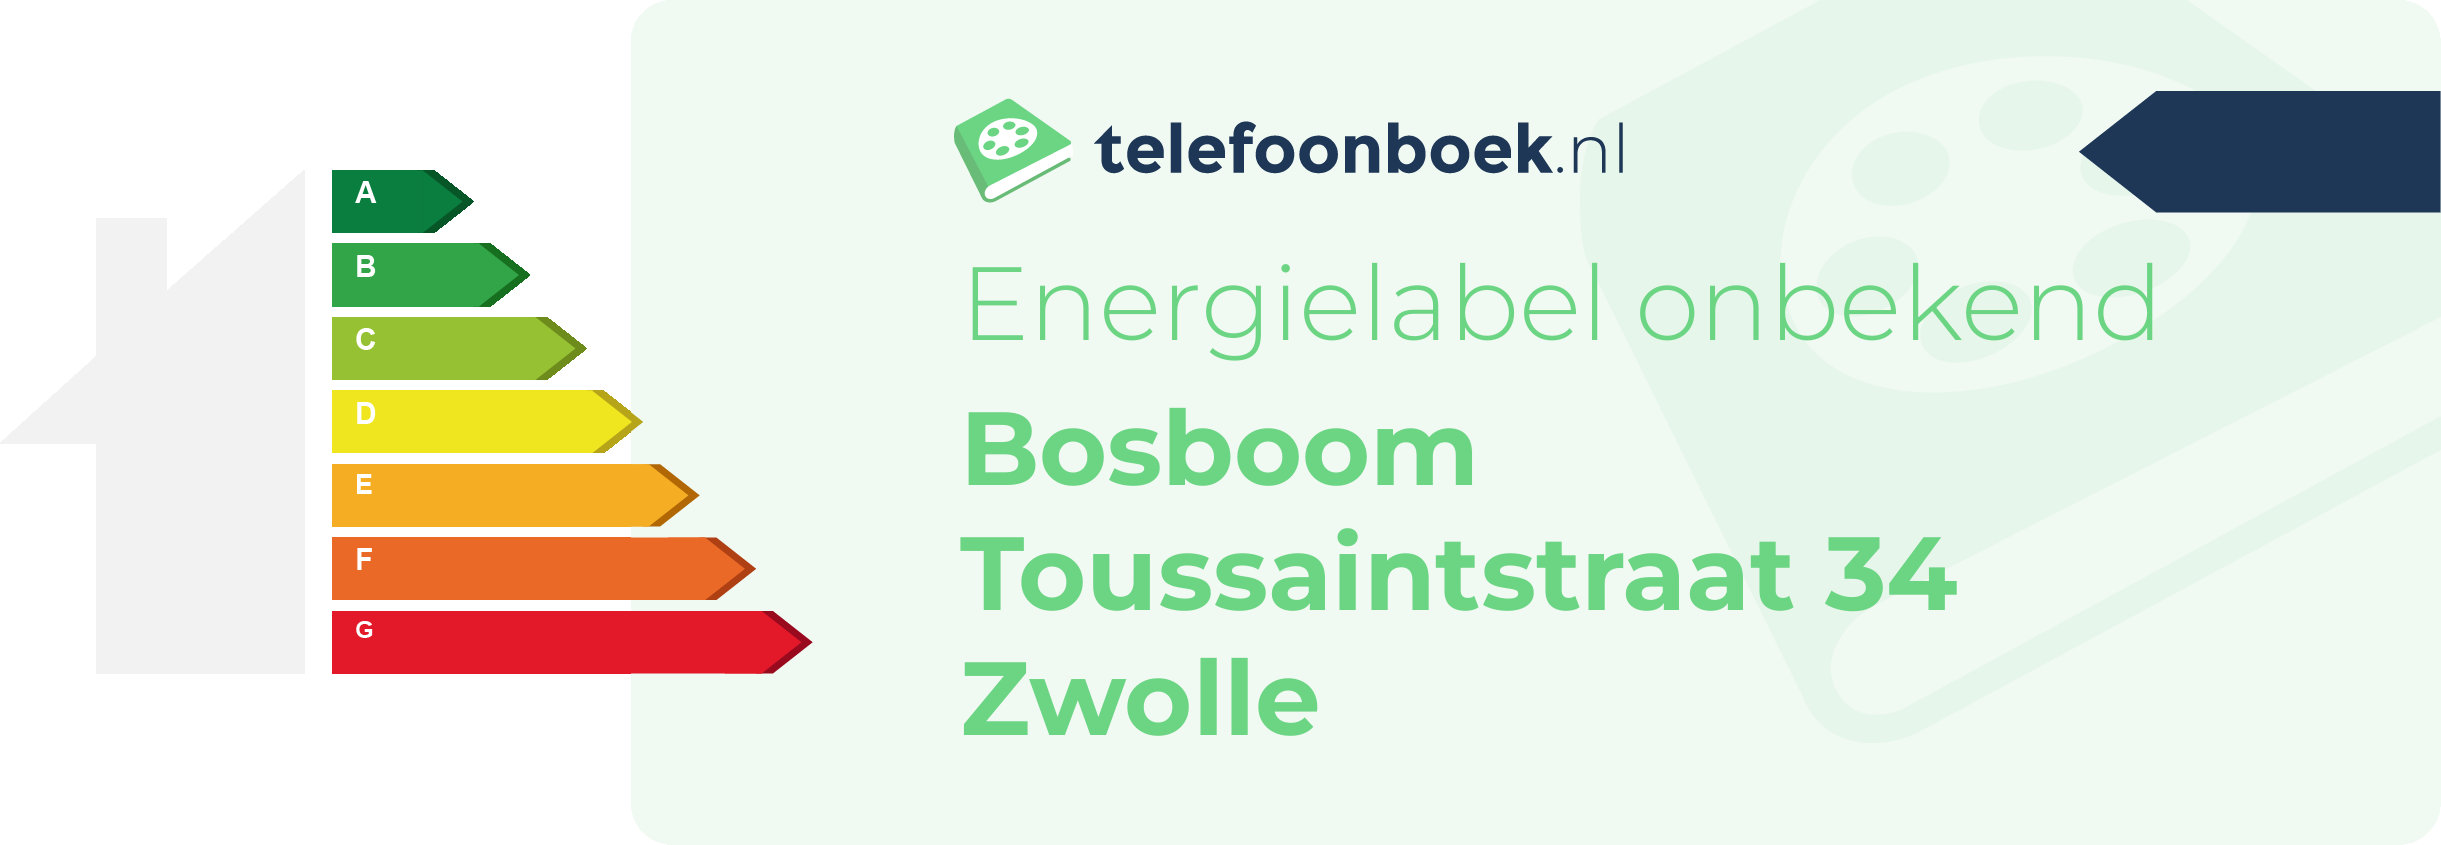 Energielabel Bosboom Toussaintstraat 34 Zwolle